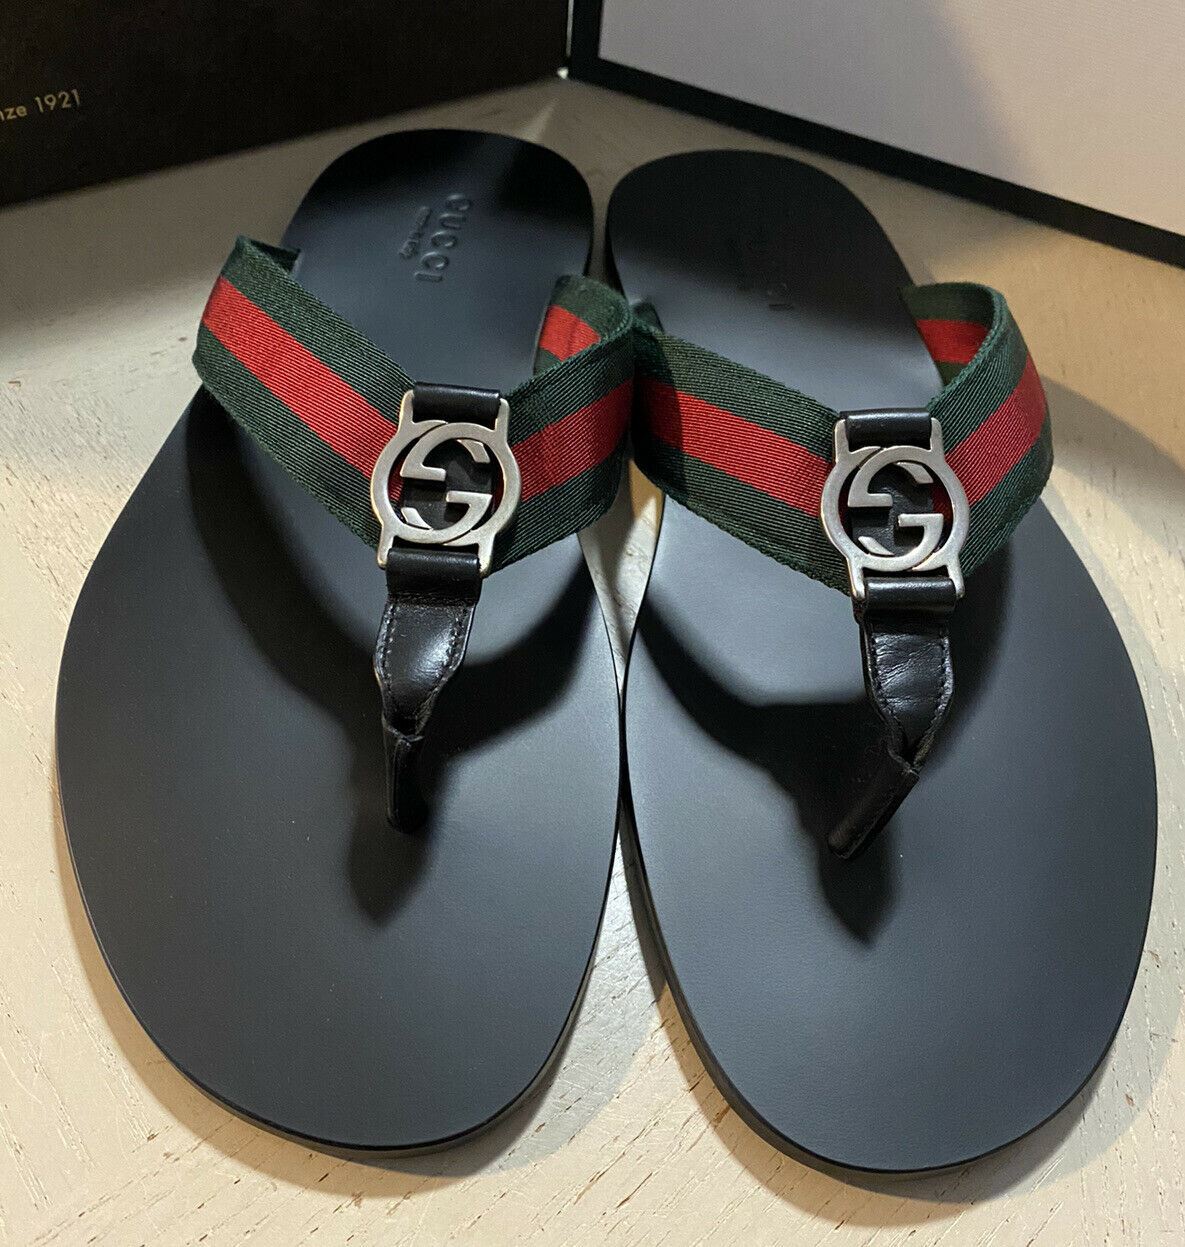 NIB Gucci Mens Sandal Shoes Green/Red/Black 10 US/9.5G UK